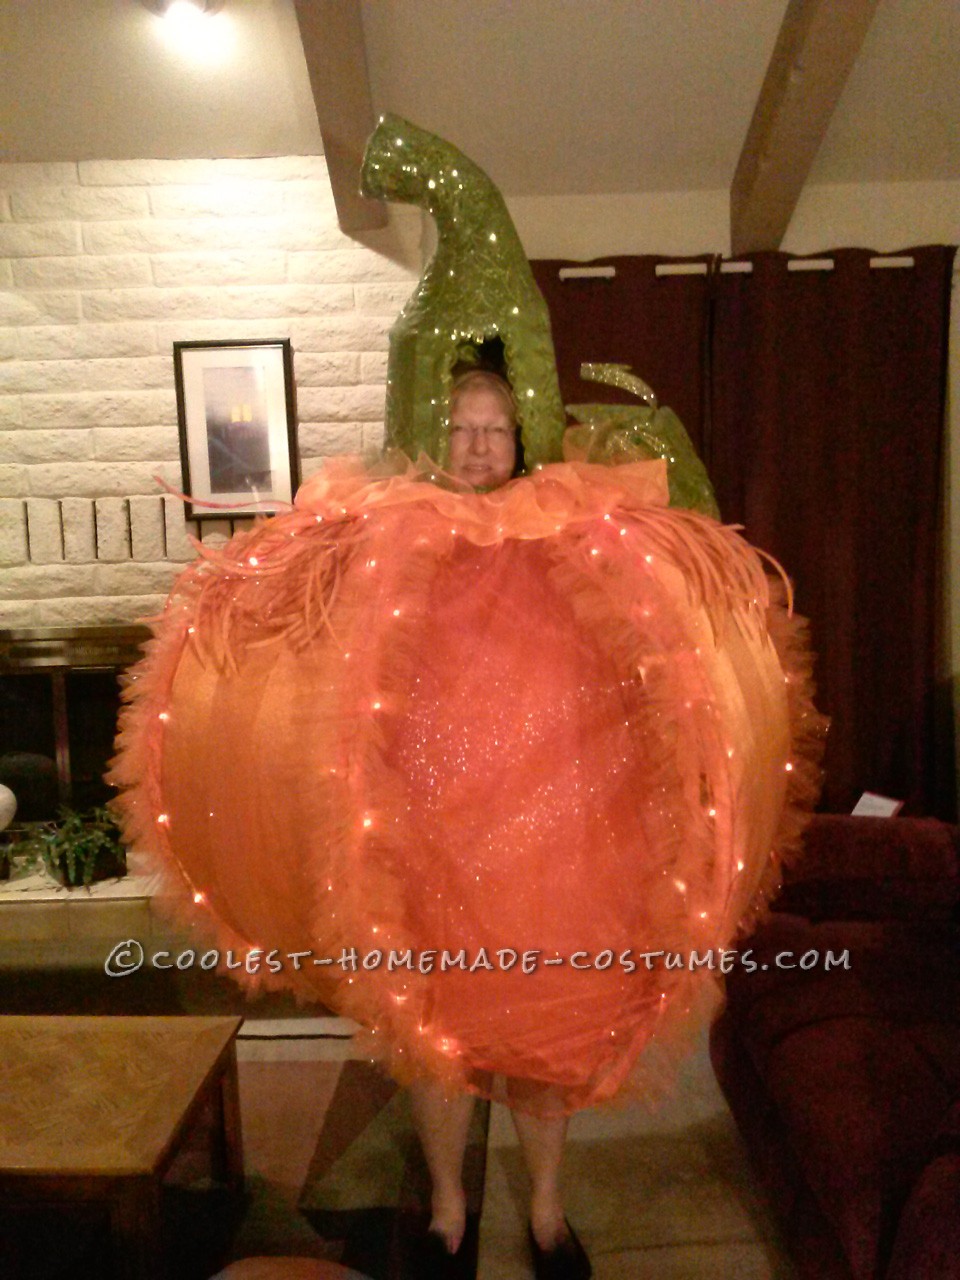 The Gigantic 5-Foot Glitzy Pumpkin Costume